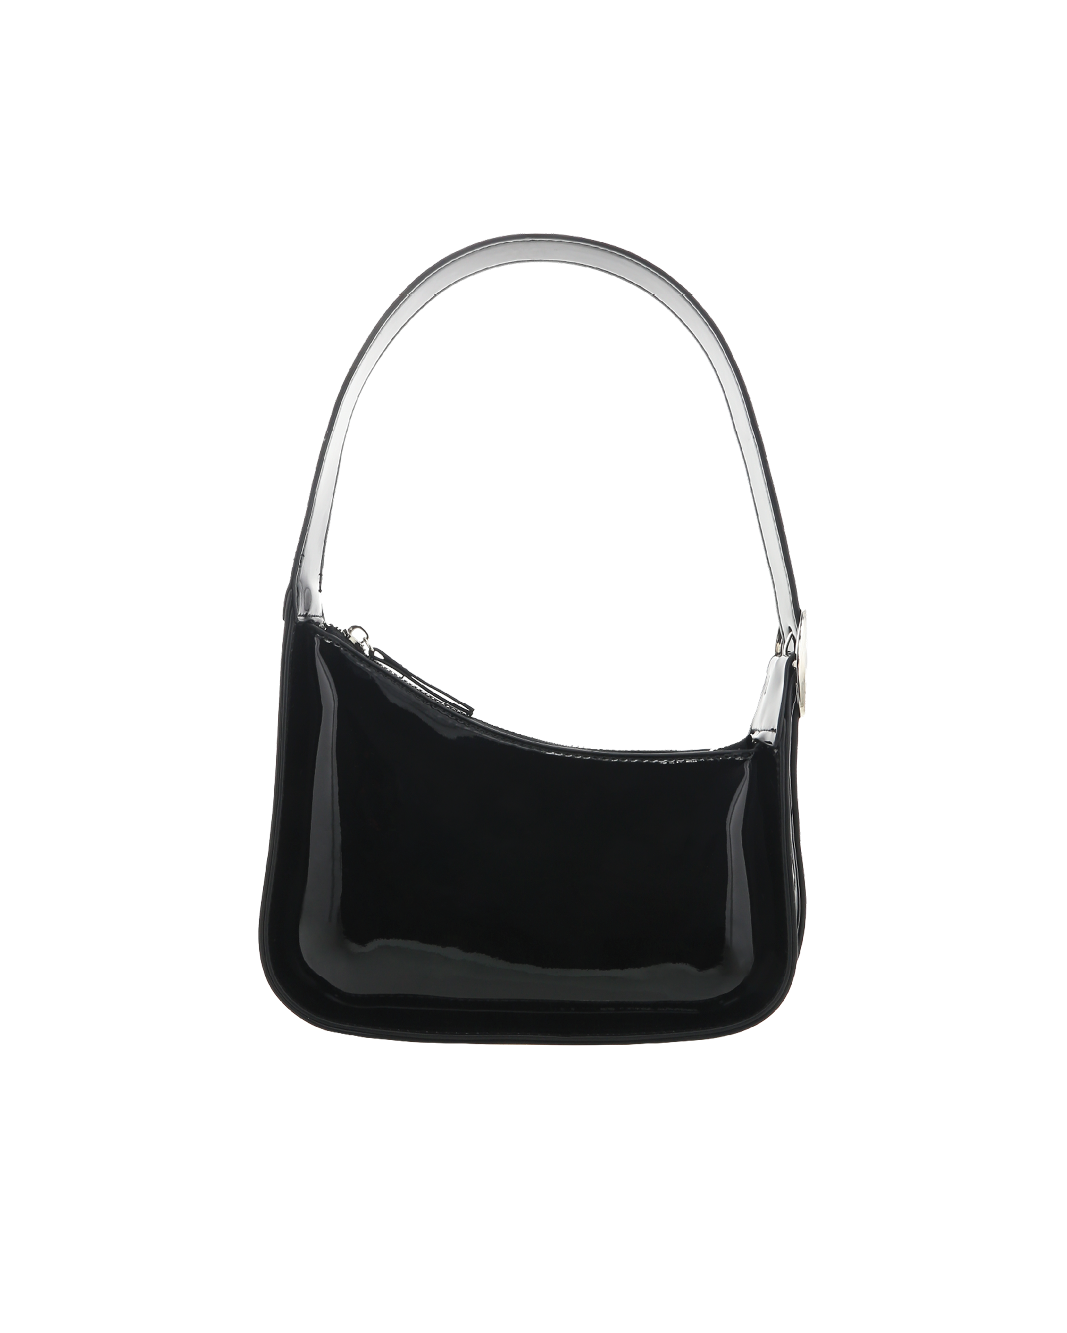 THE SHOULDER - BLACK PATENT-Handbags-Billini--Billini